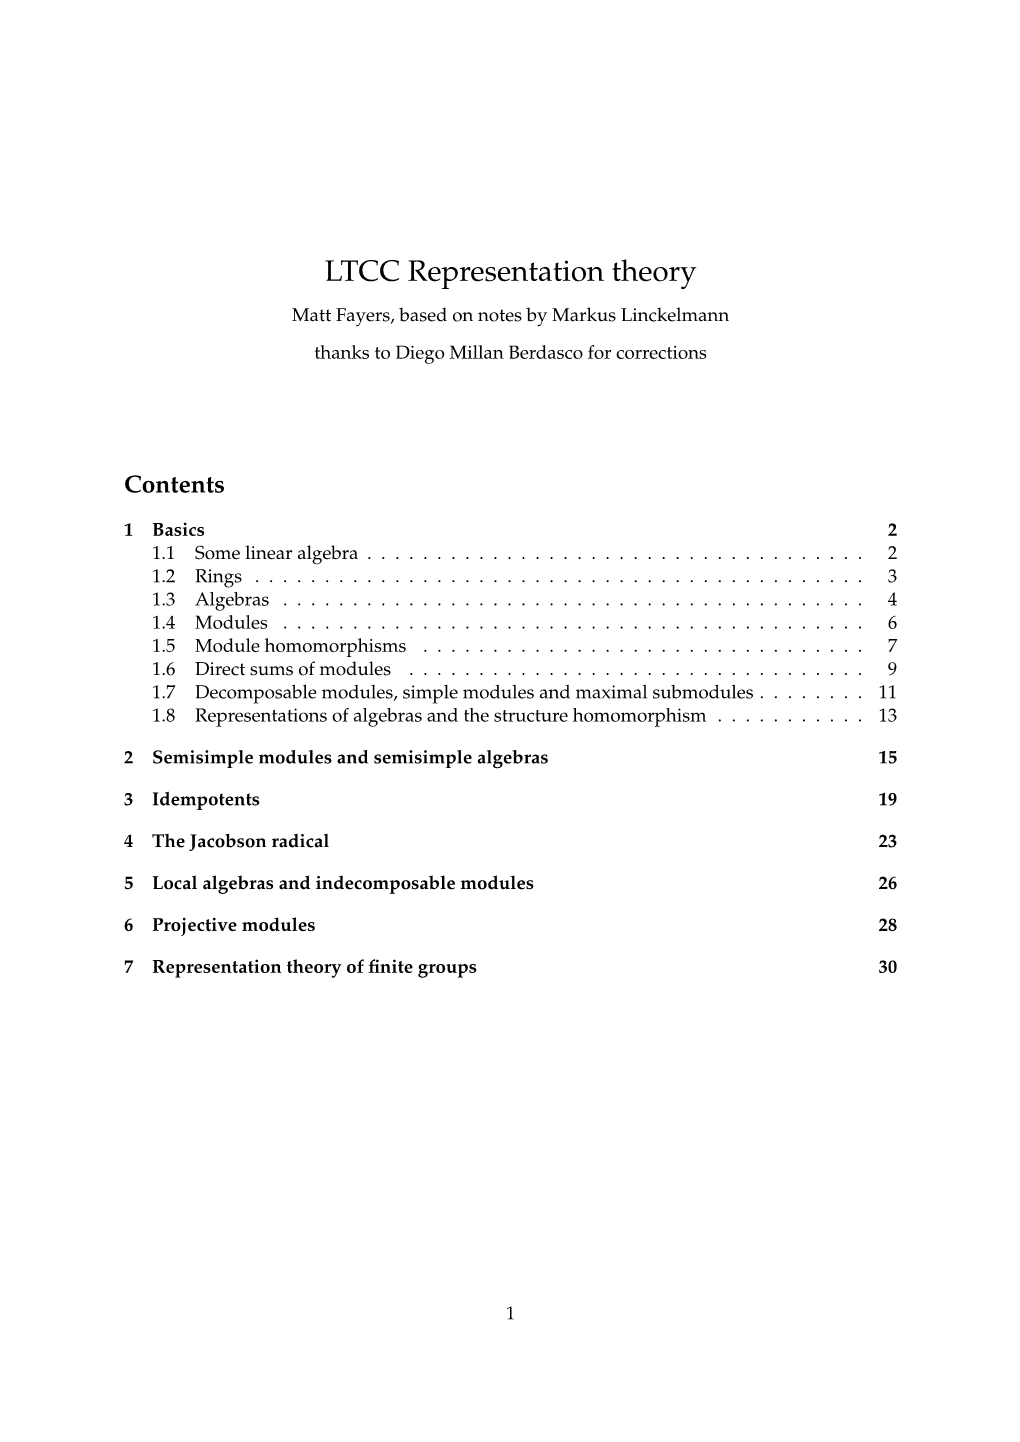 LTCC Representation Theory Matt Fayers, Based on Notes by Markus Linckelmann